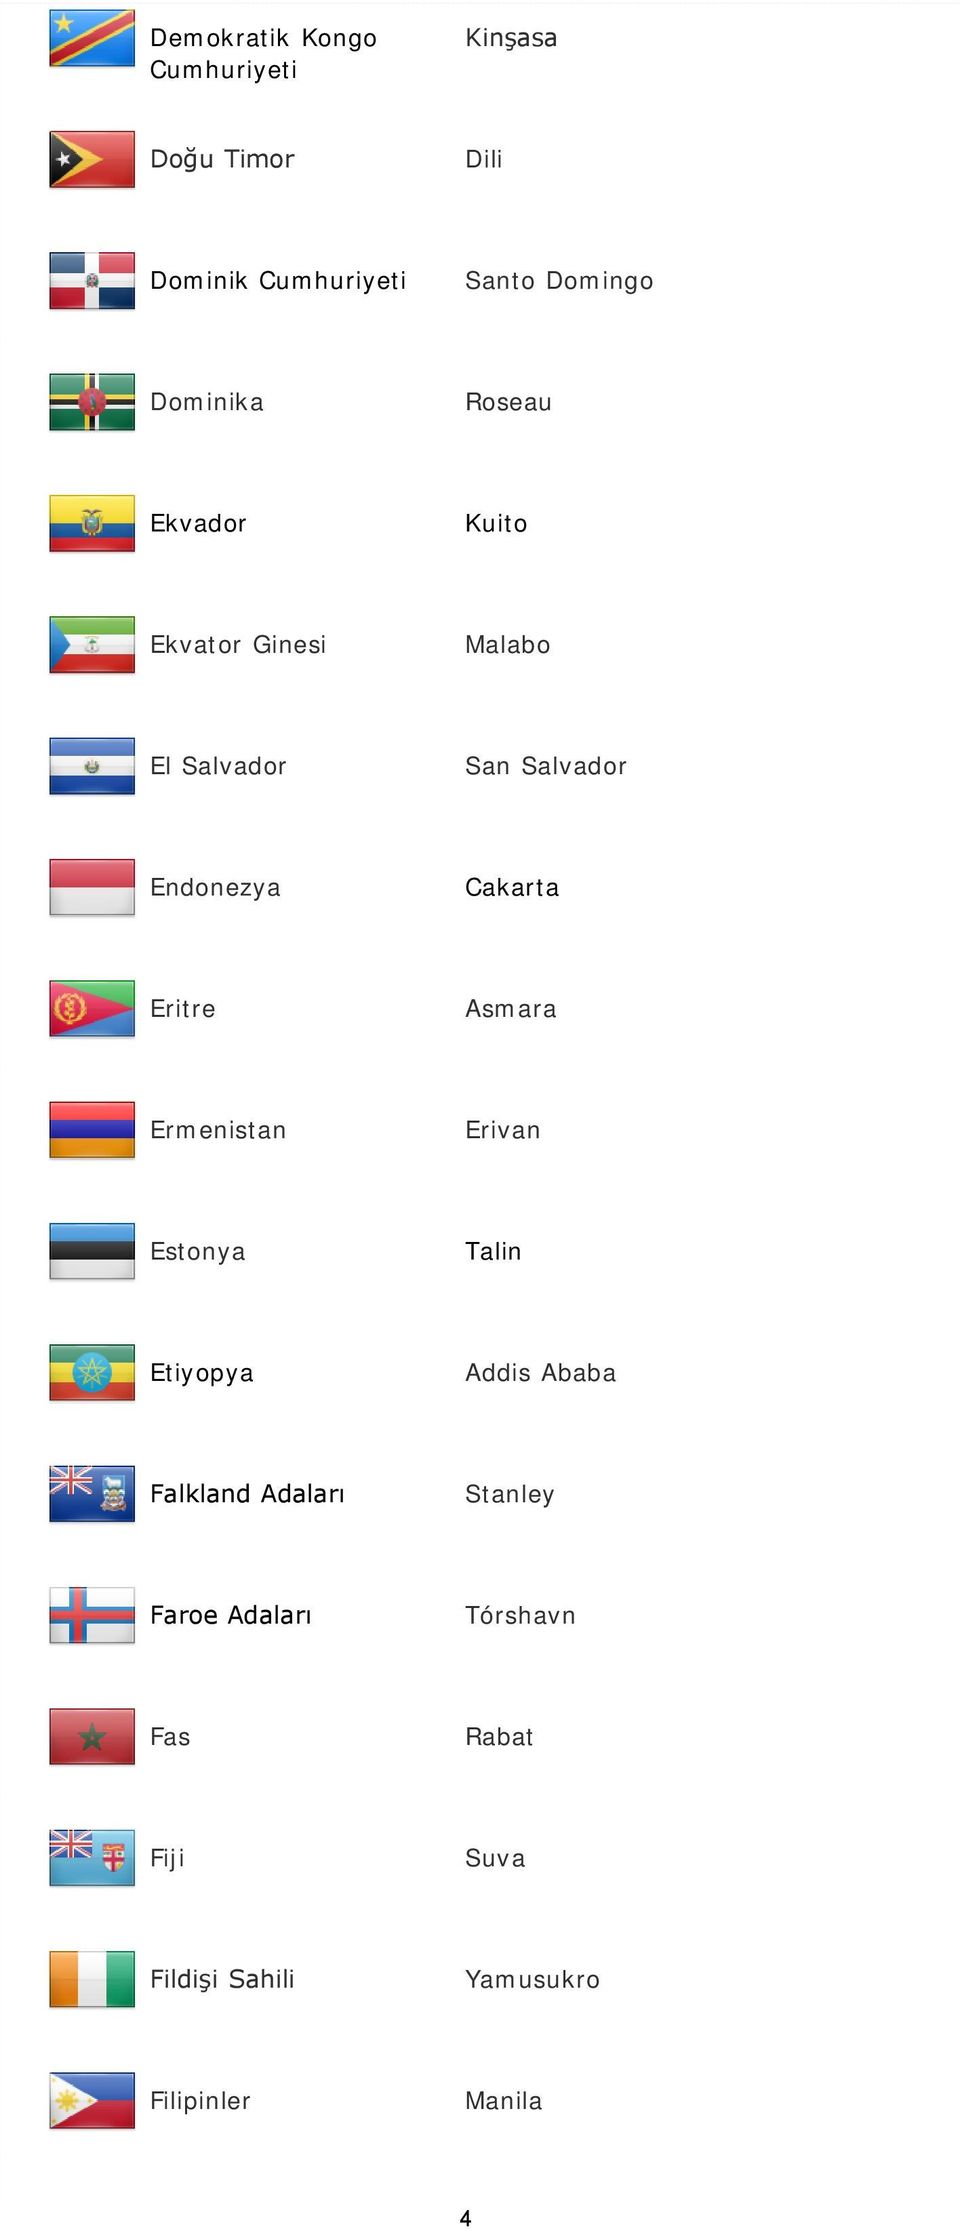 Cakarta Eritre Asmara Ermenistan Erivan Estonya Talin Etiyopya Addis Ababa Falkland